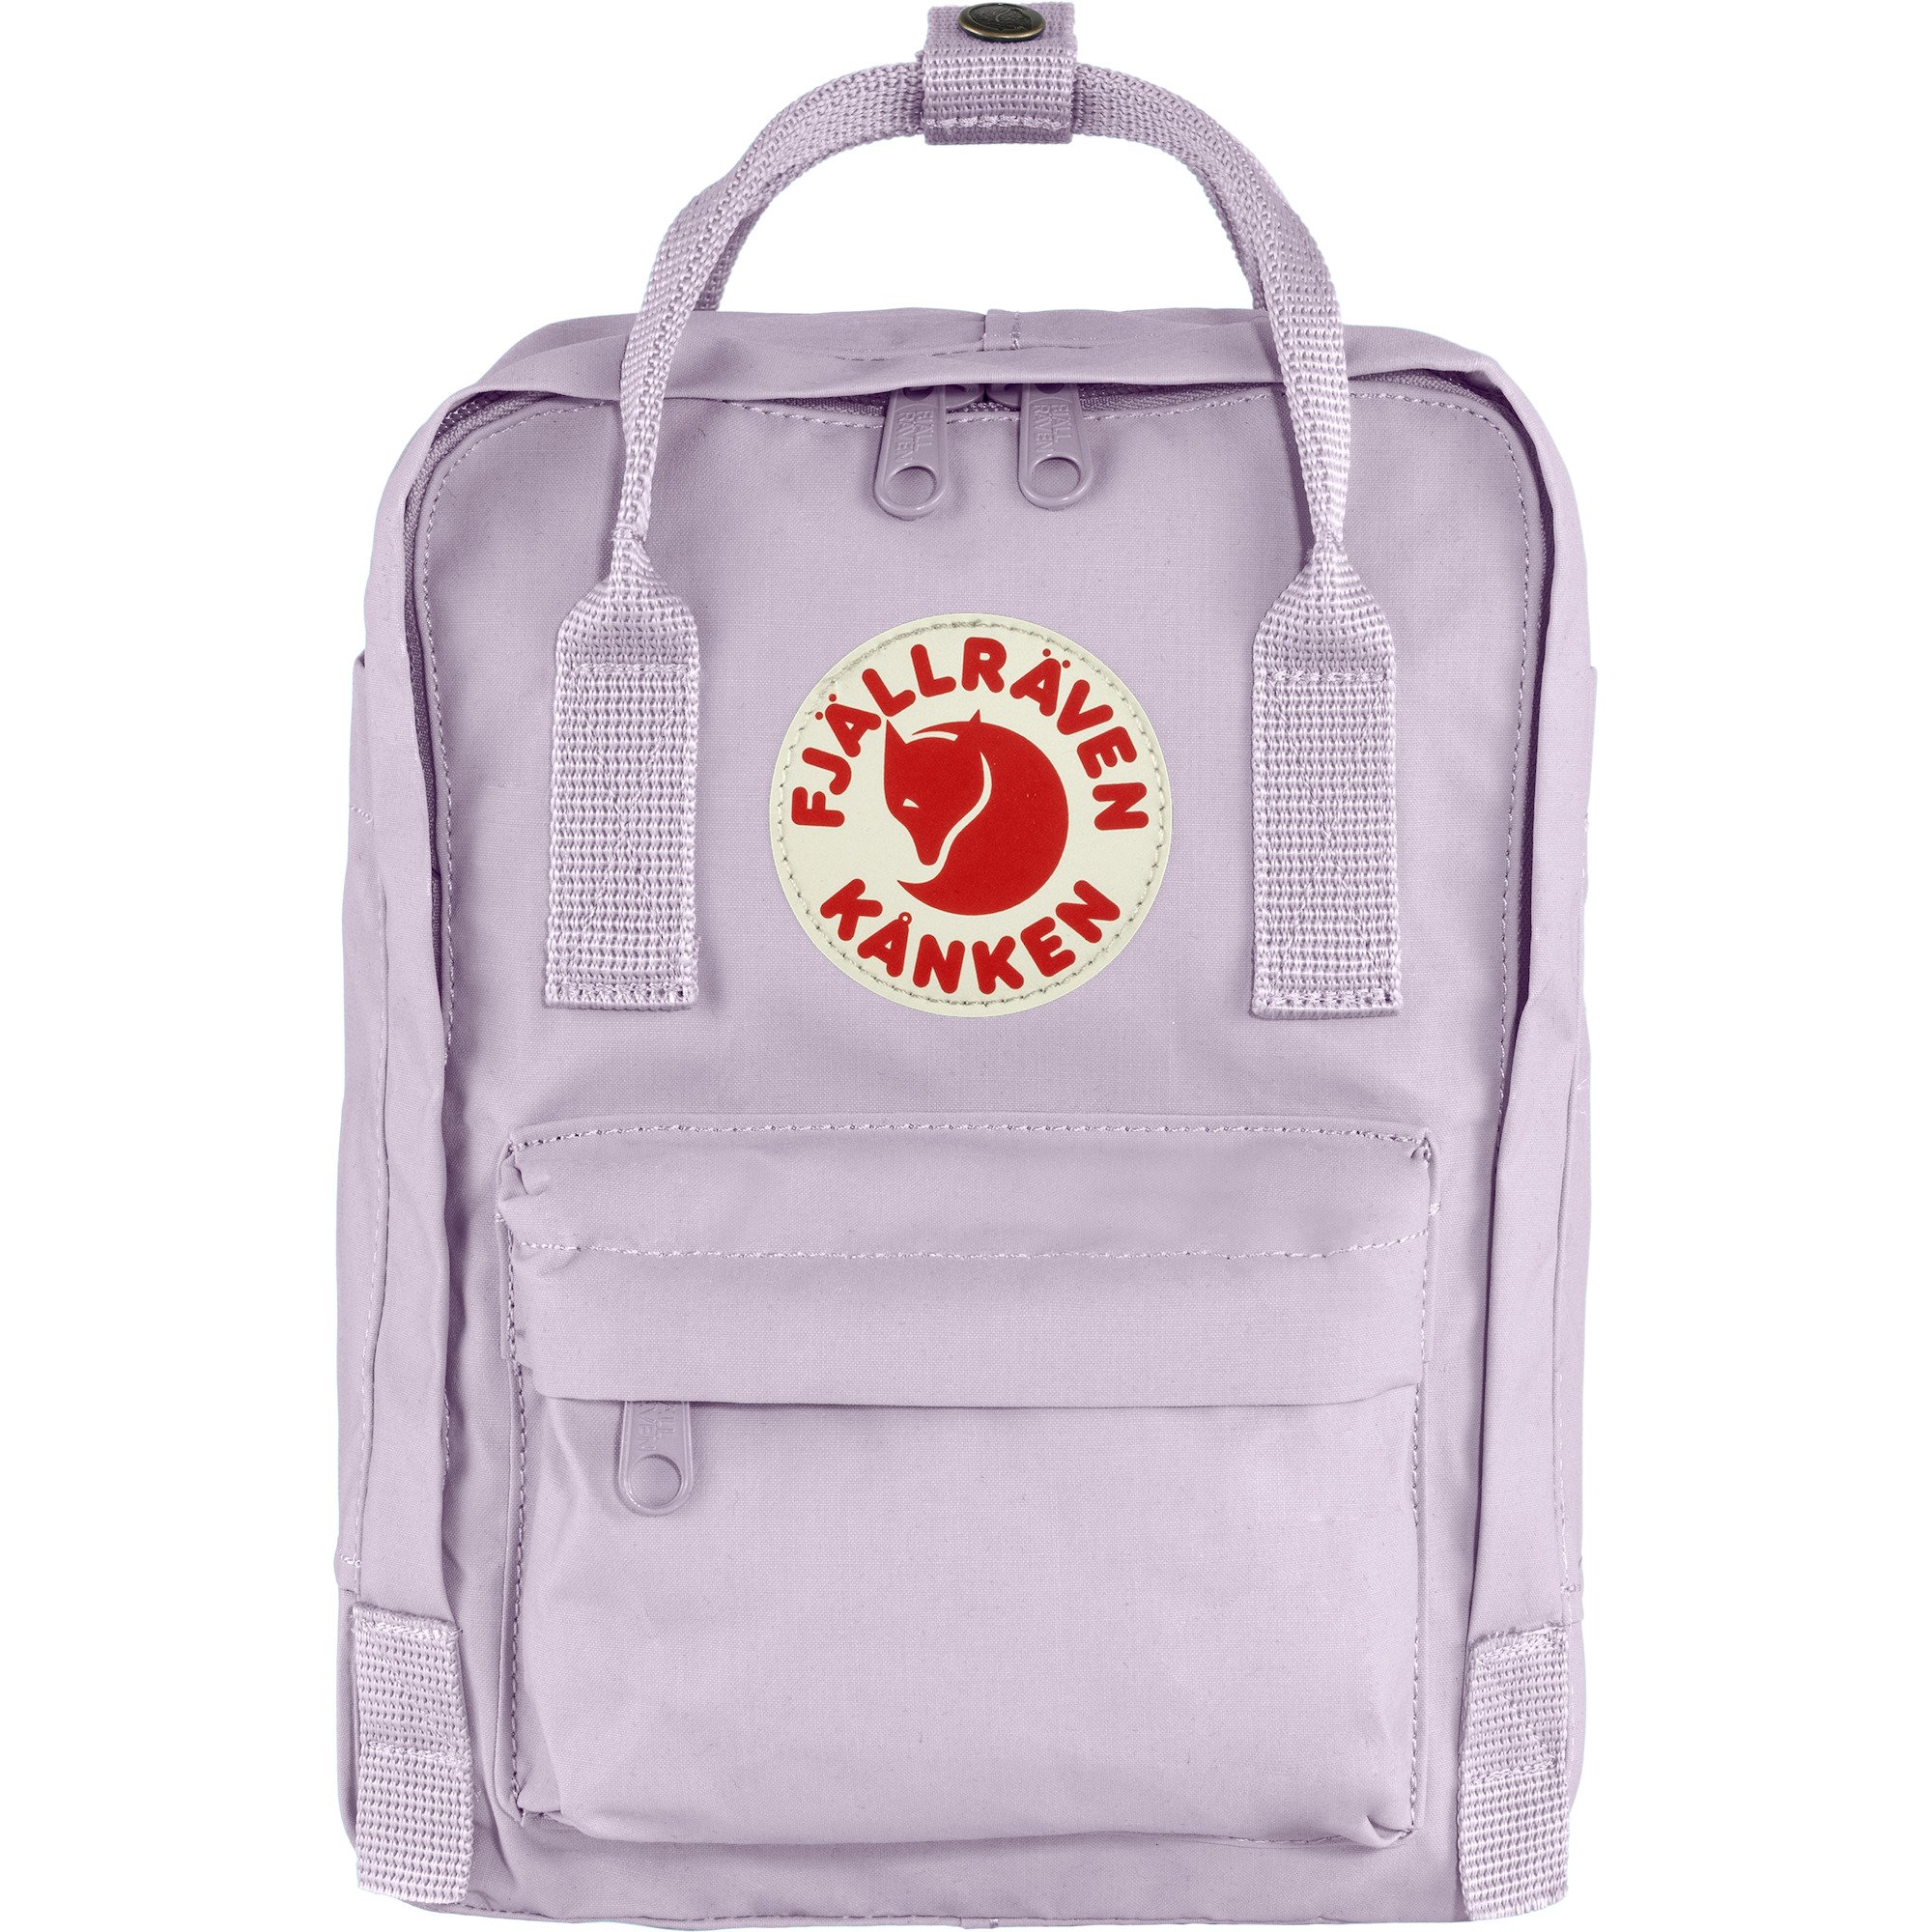 Crazy flamingo lady kit bag backpack ruck sack school 